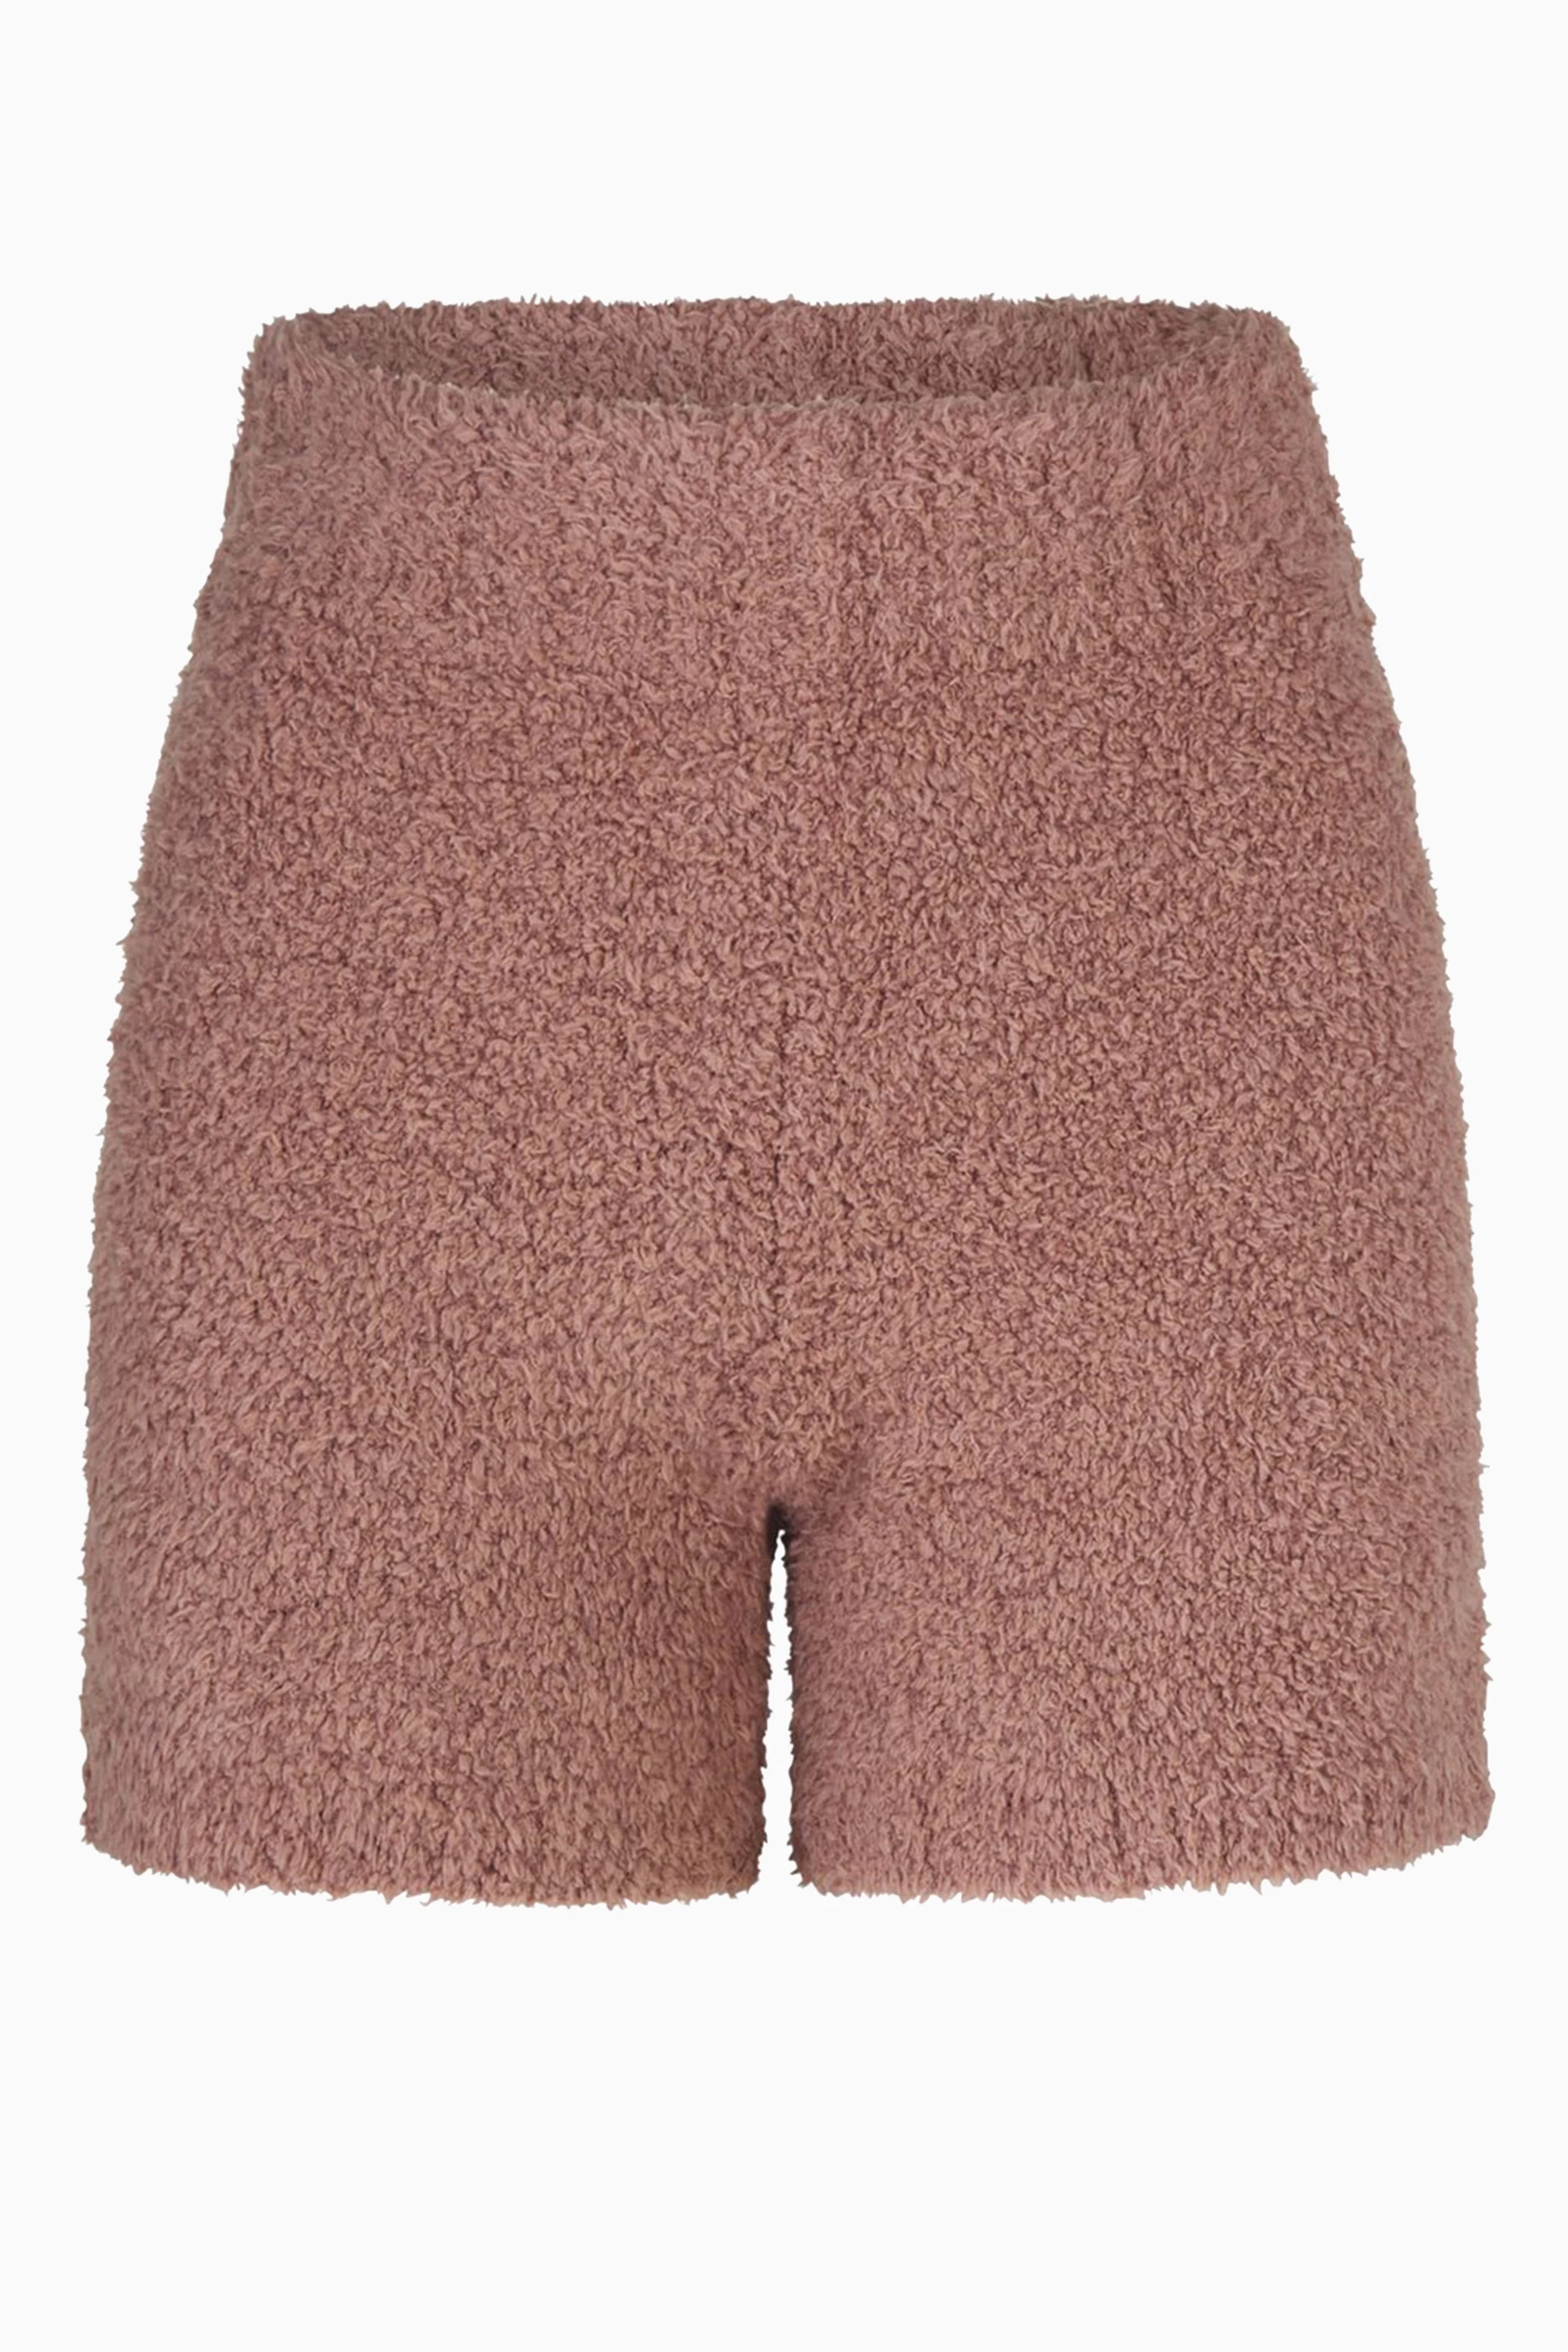 Buy SKIMS Brown Cozy Knit Short for Women in UAE